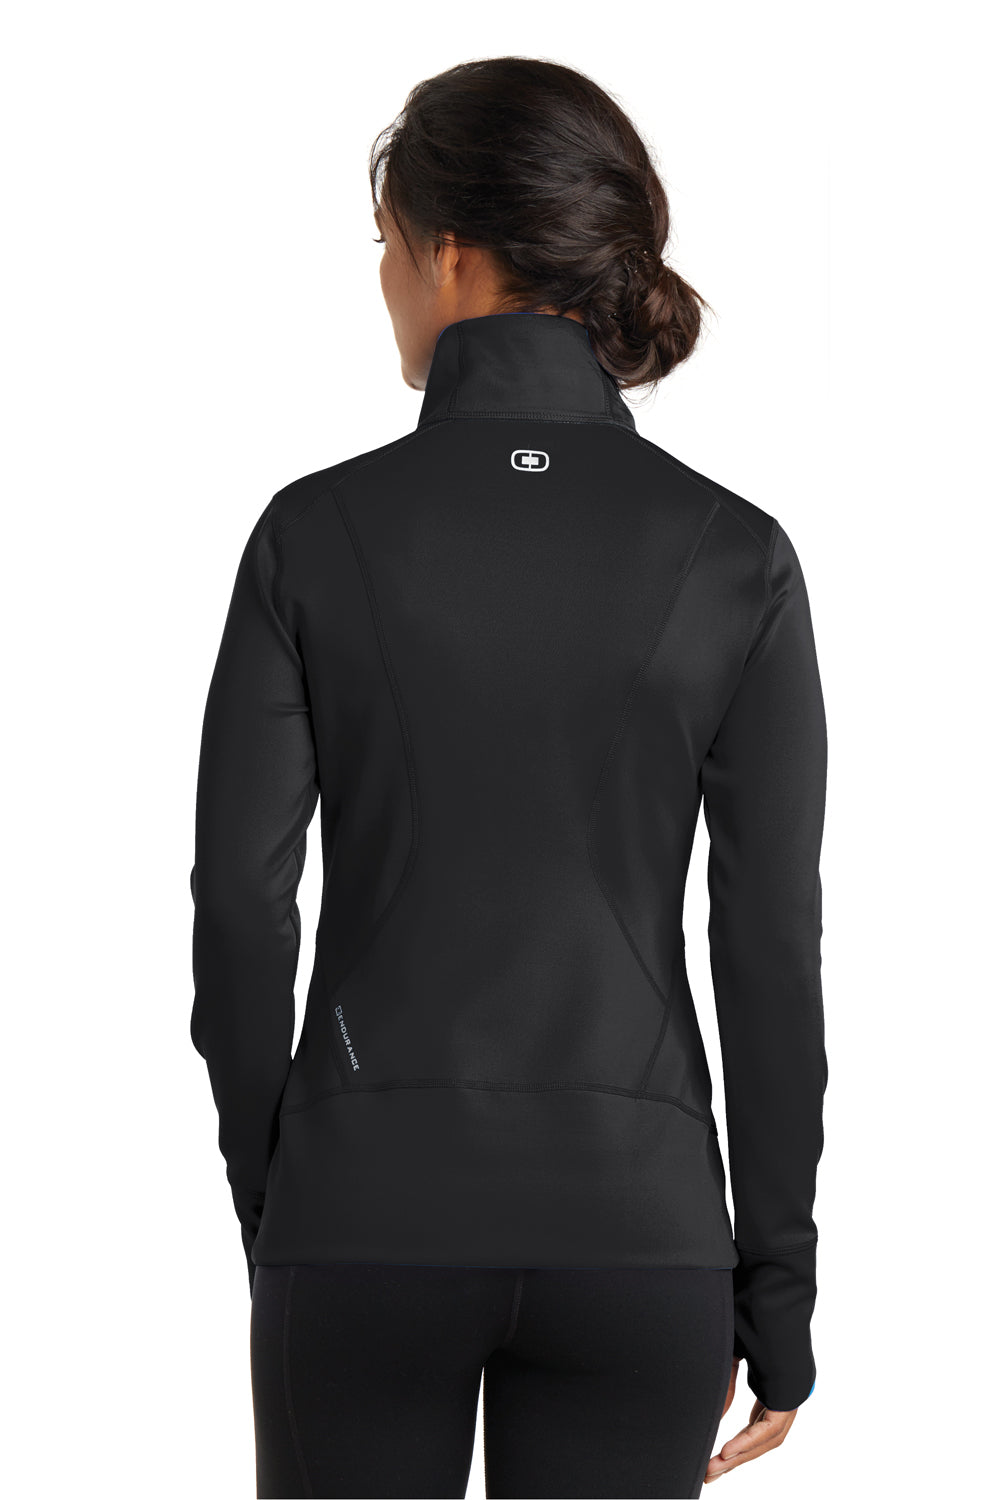 Ogio LOE700 Womens Endurance Fulcrum Full Zip Jacket Black Back